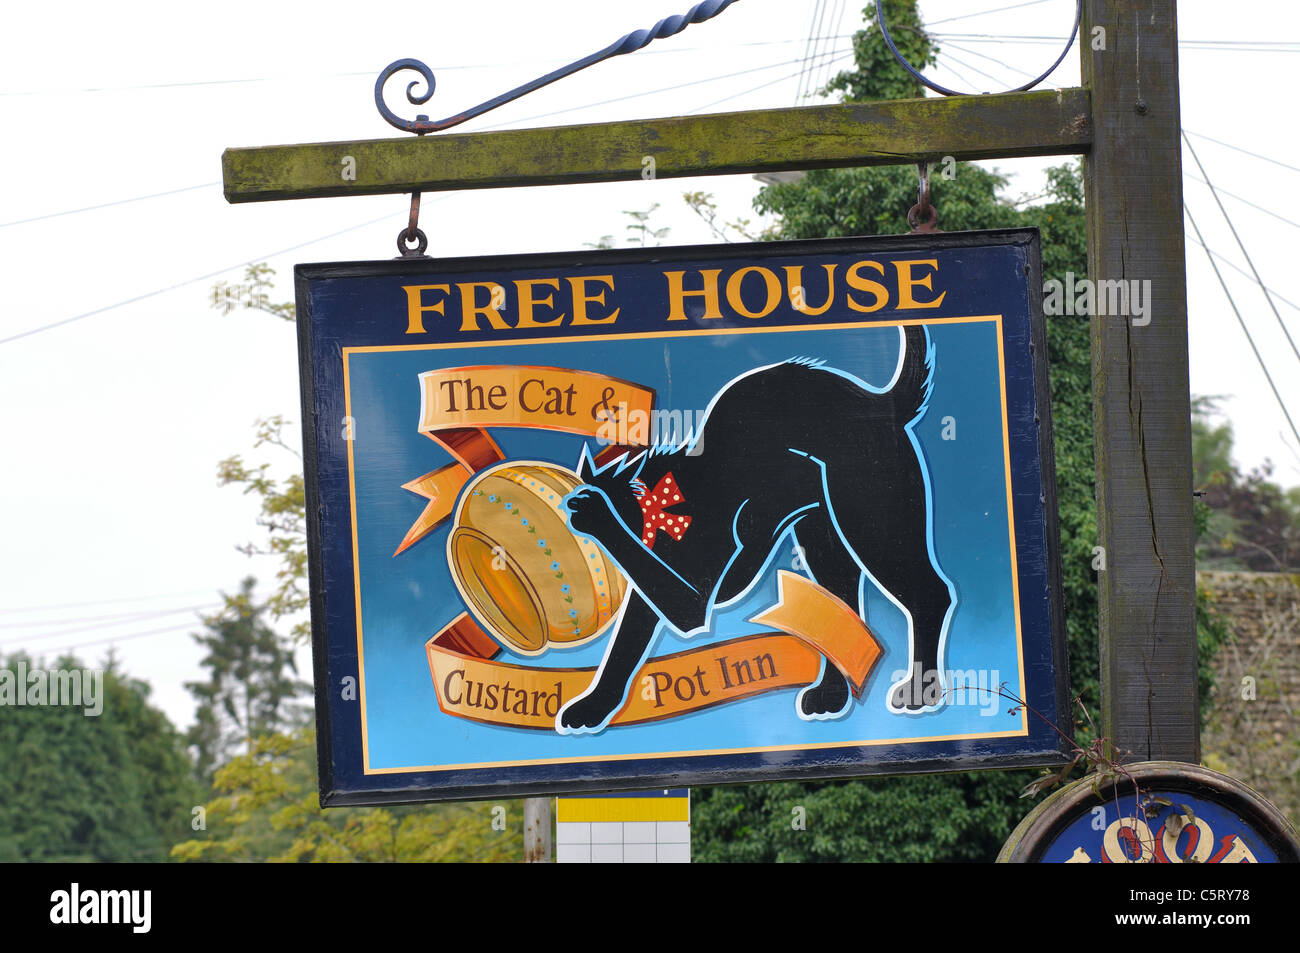 The Cat and Custard Pot Inn sign, Shipton Moyne, Gloucestershire, England, UK Stock Photo